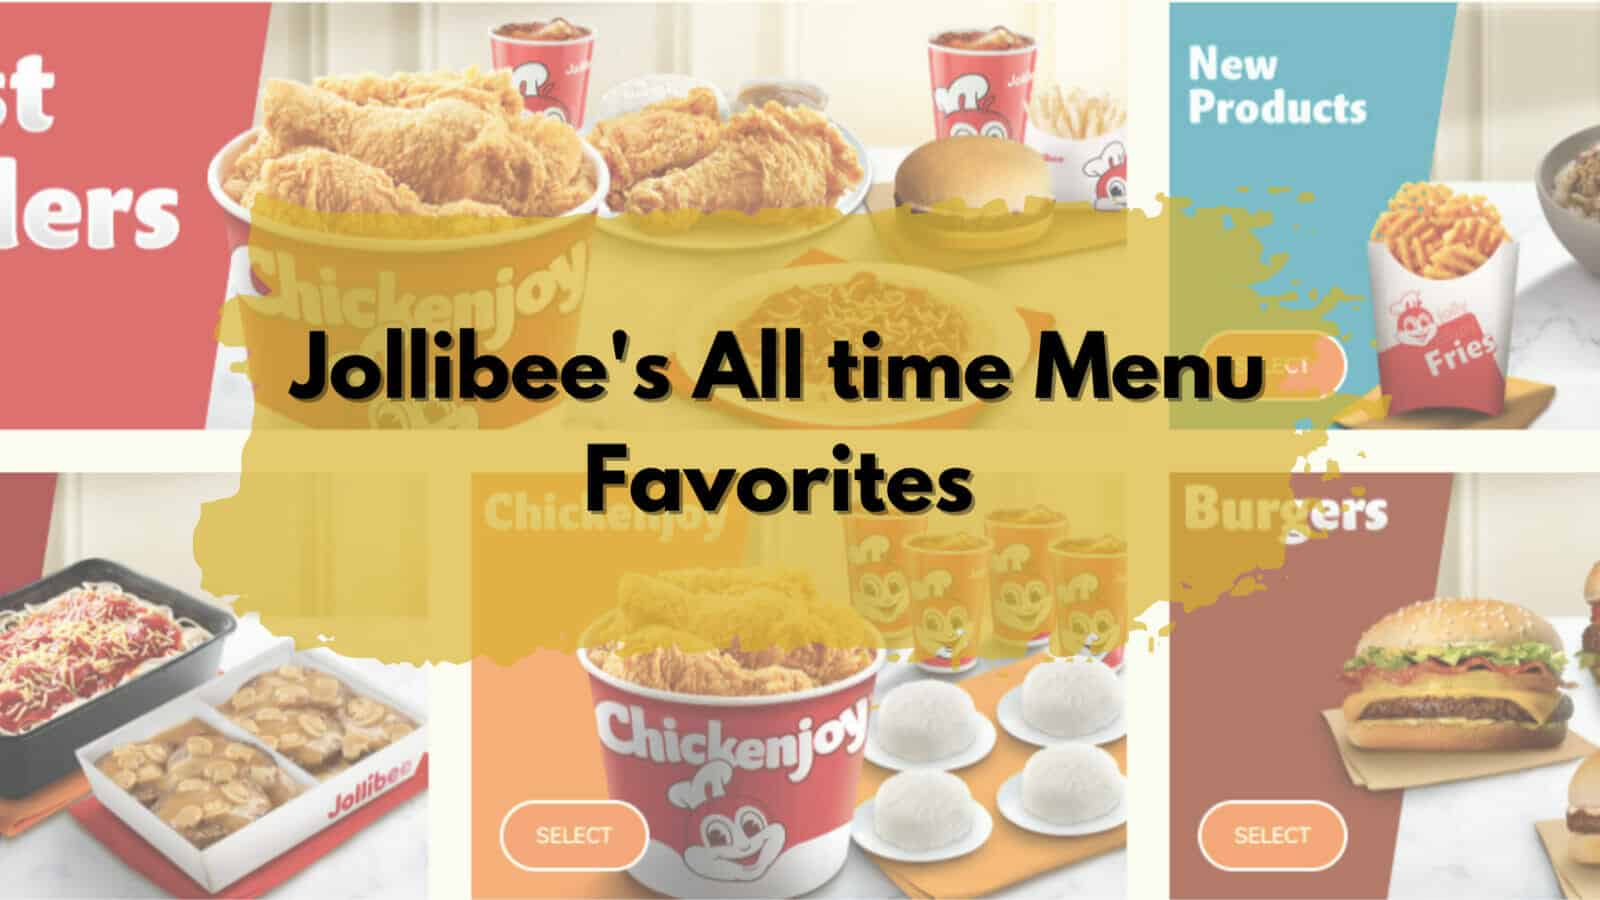 All-time menu favorites of Jollibee.